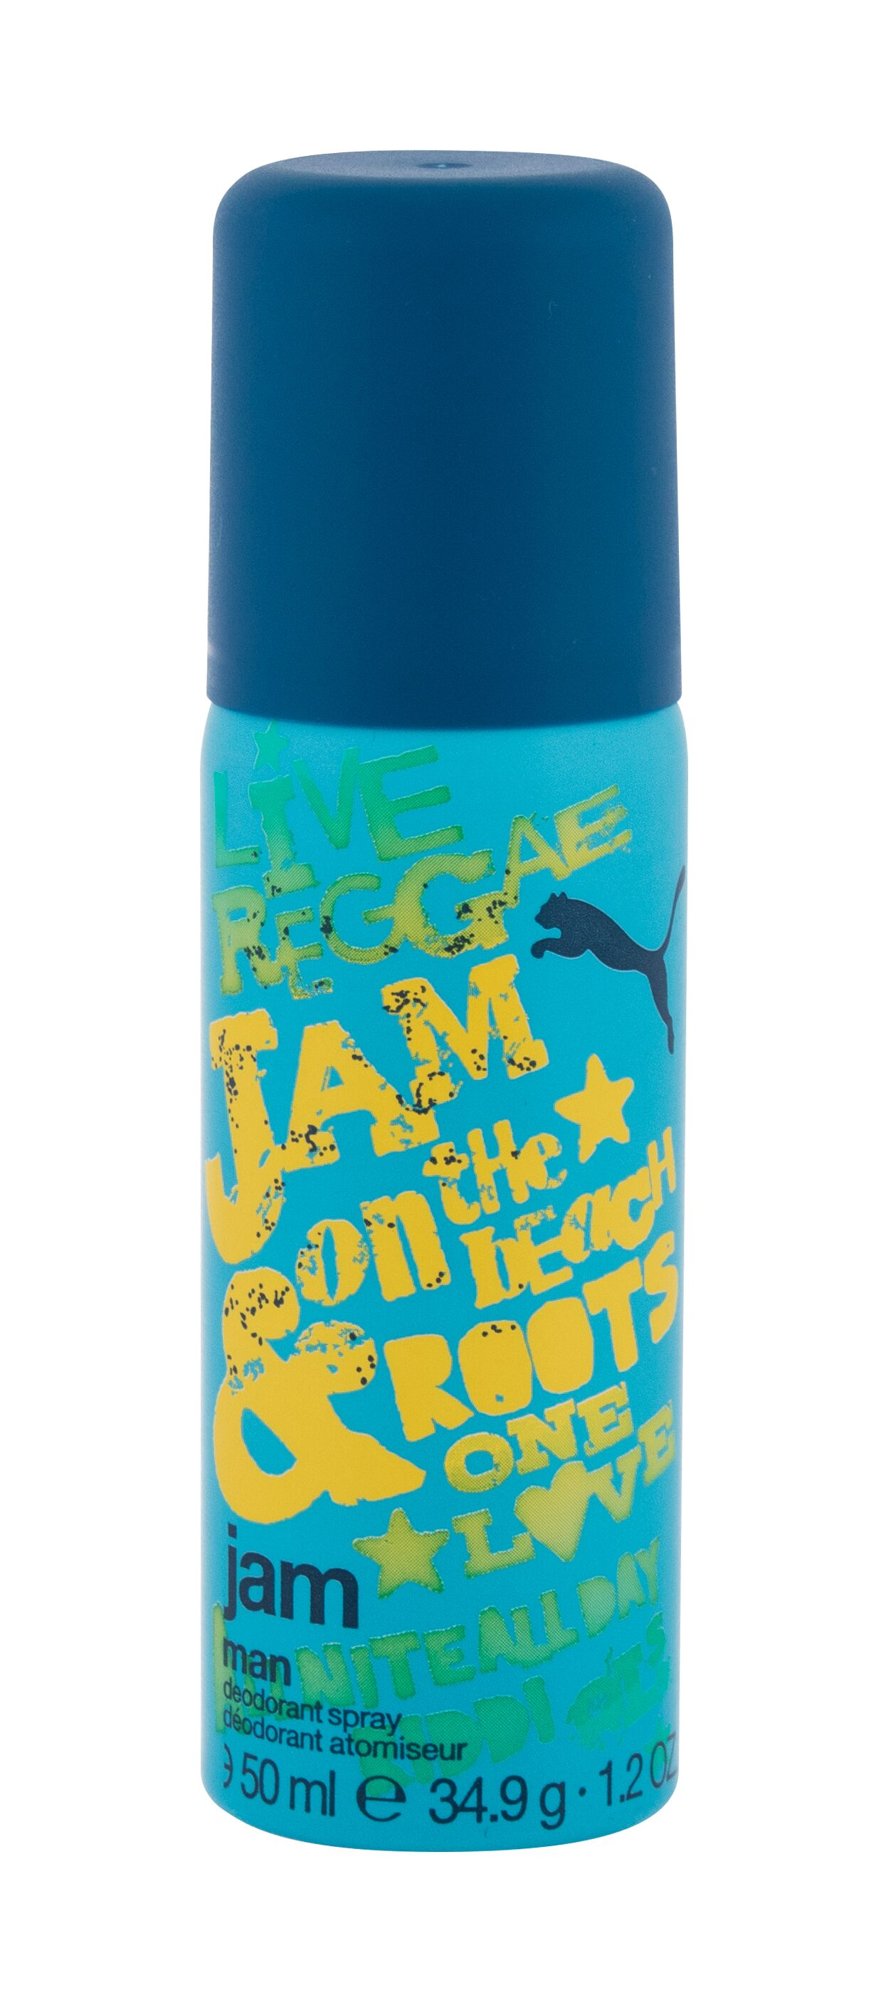 Puma Jam Man 50ml dezodorantas